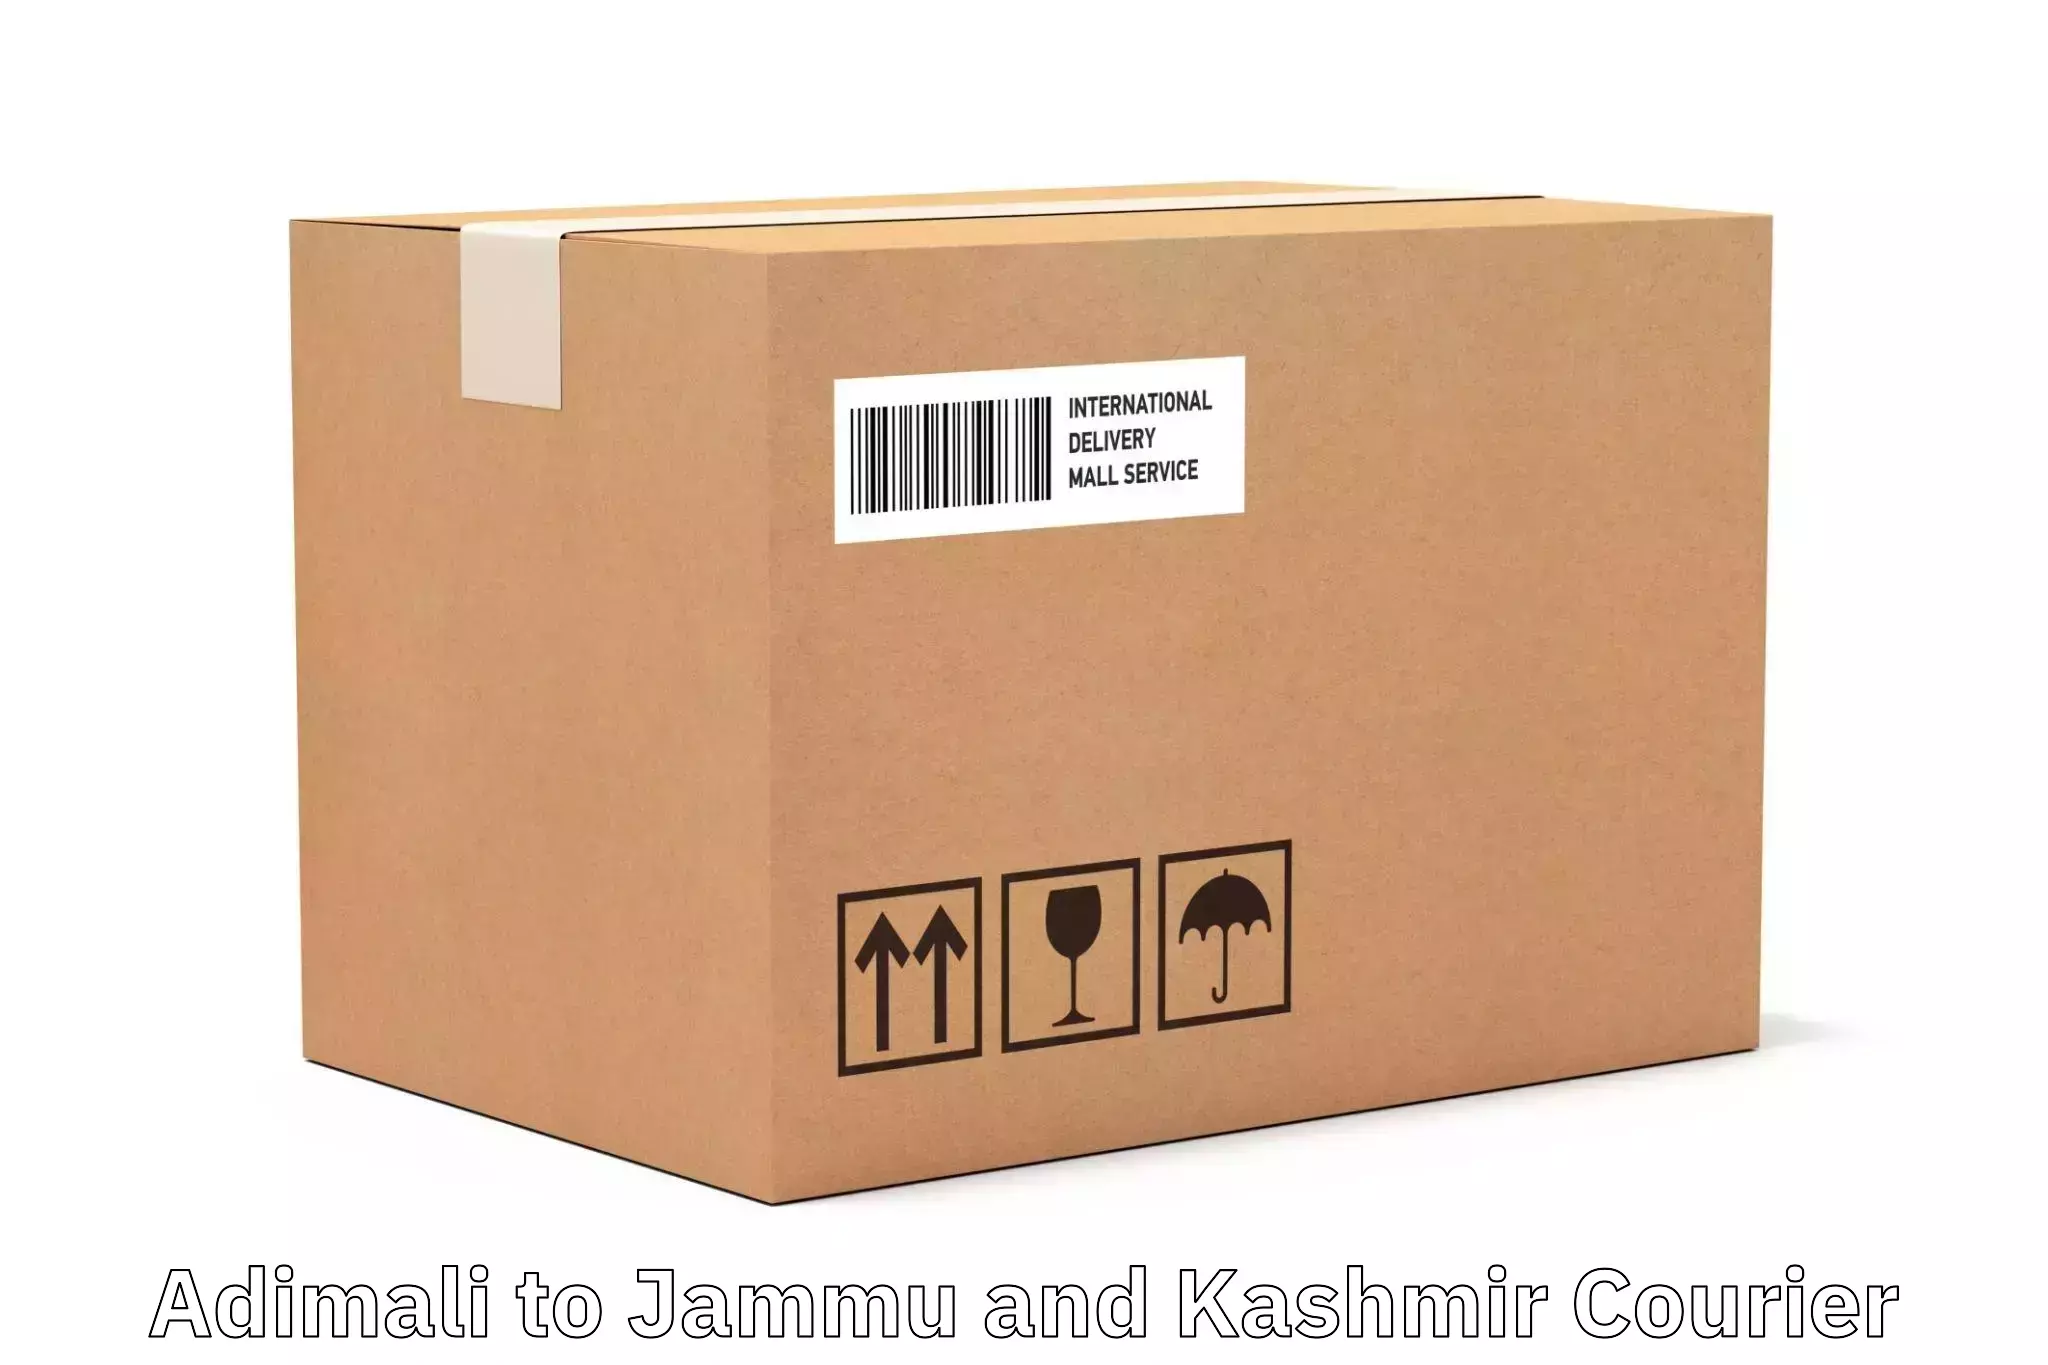 Express package handling Adimali to University of Jammu